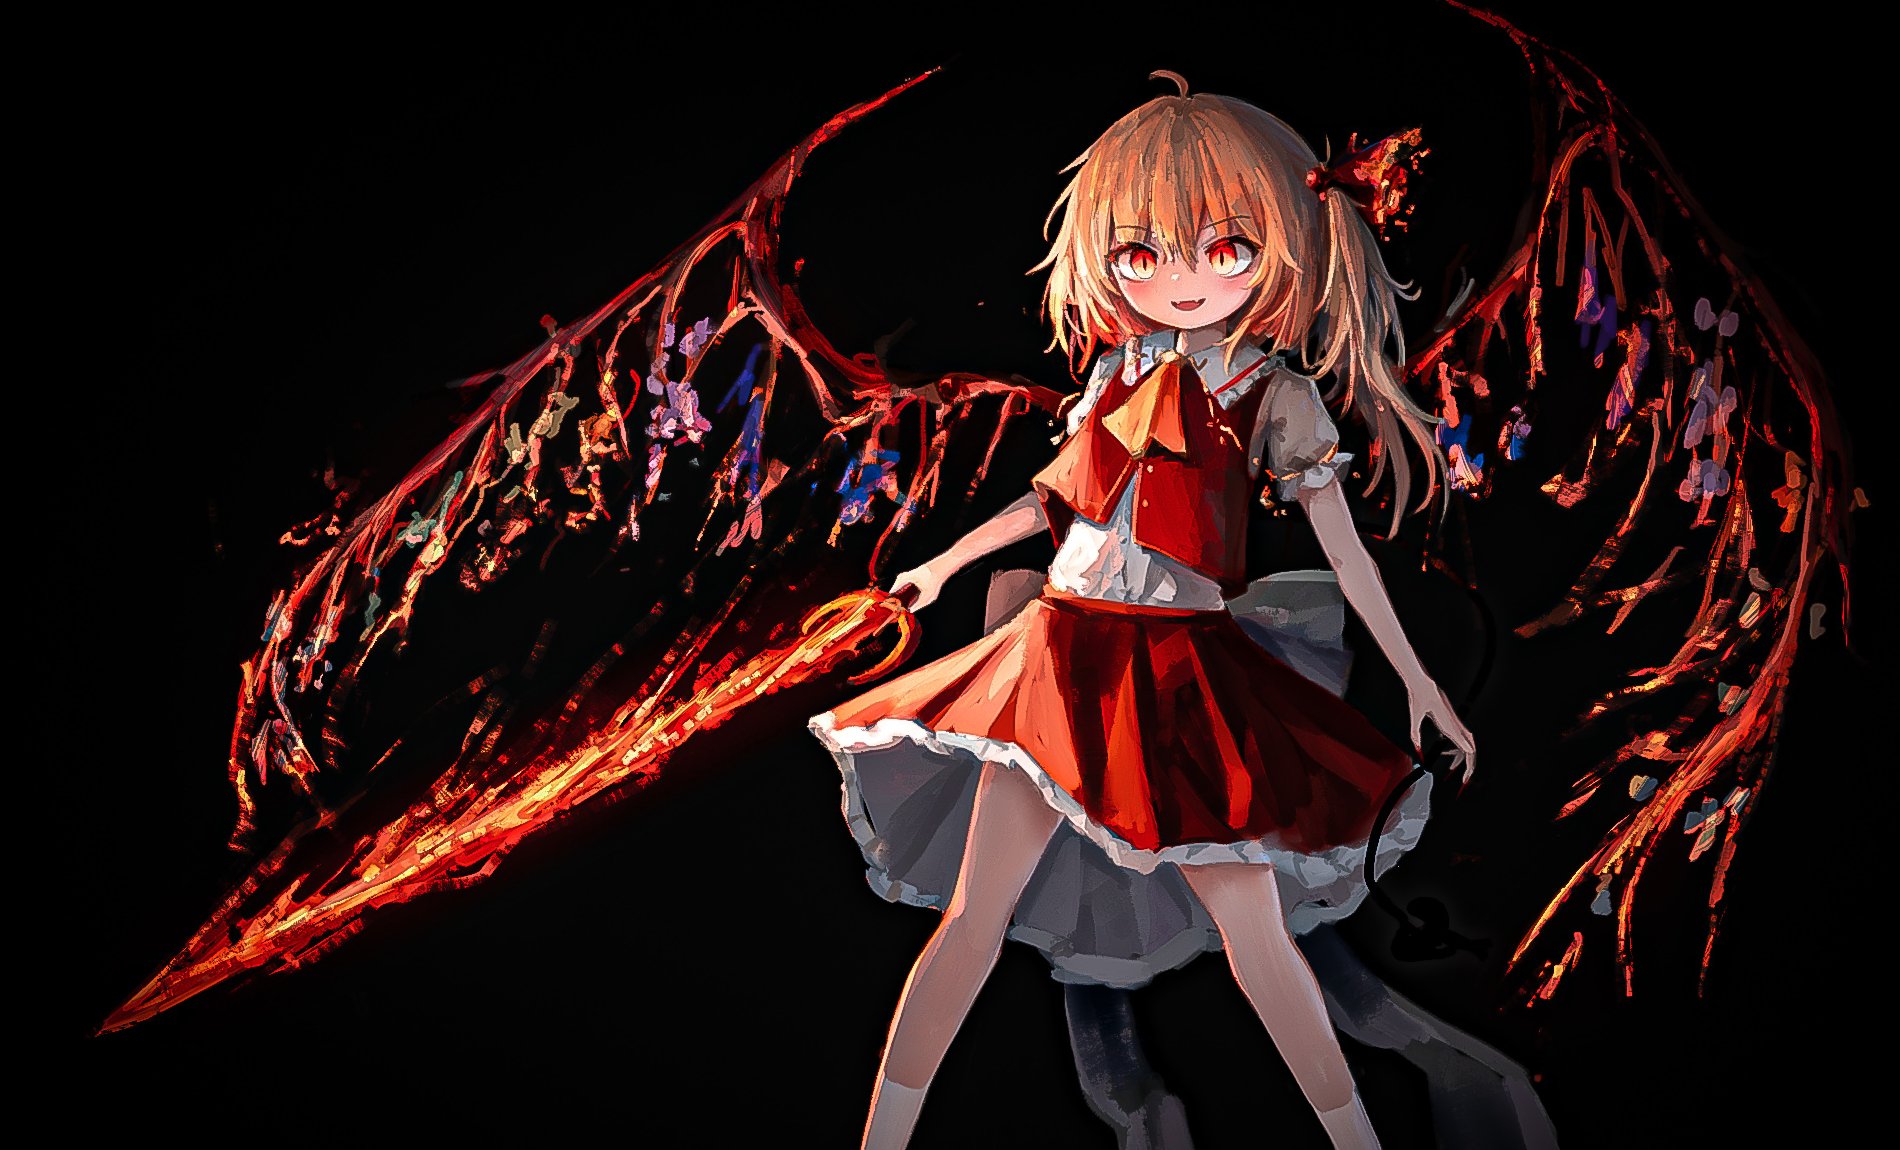 Anime 1900x1150 Touhou Flandre Scarlet black background wings sword blonde anime girls red dress